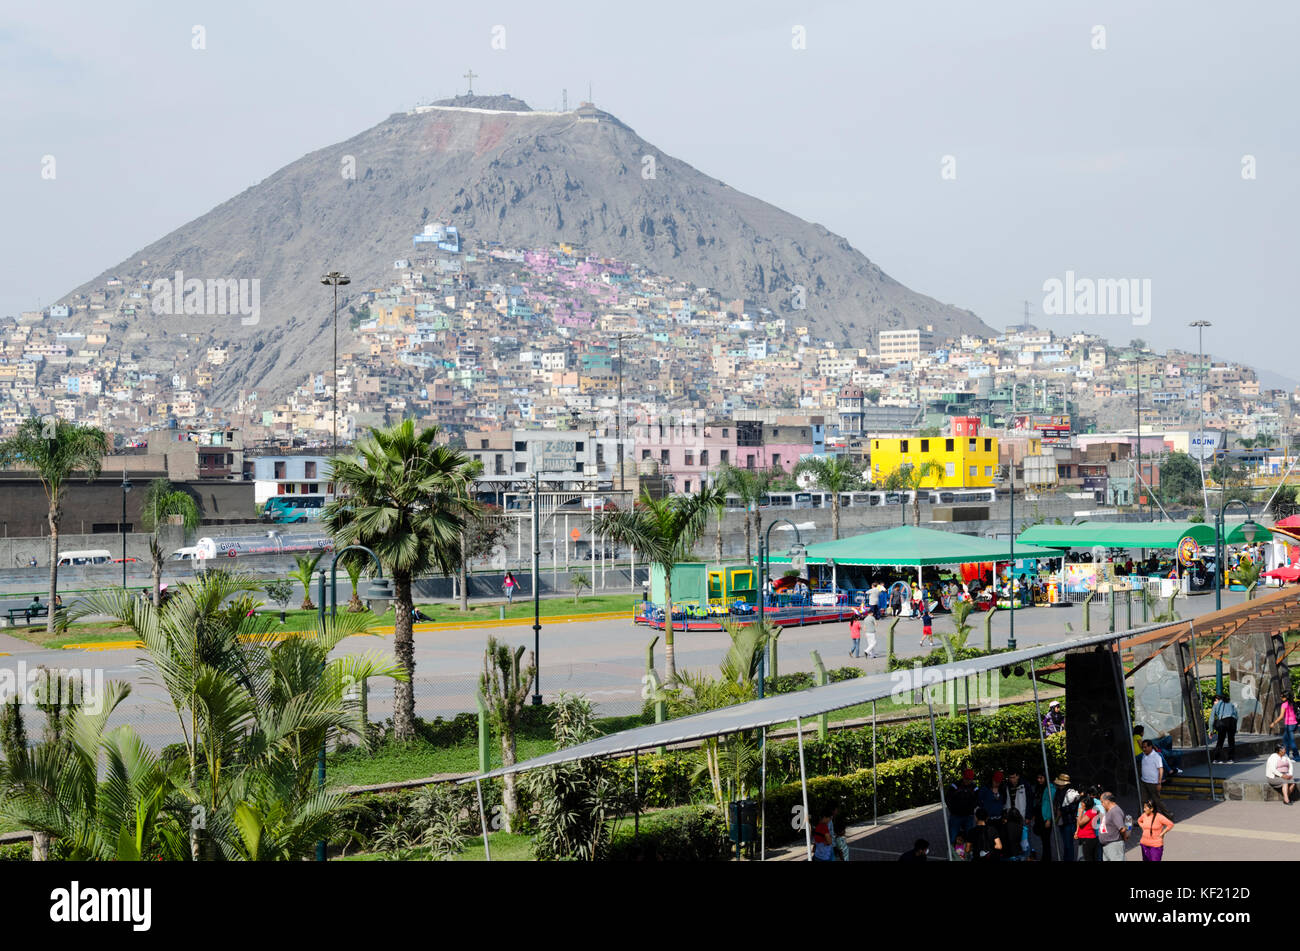 San Cristobal hill / Cerro San Cristobal. Lima, Peru. Stock Photo